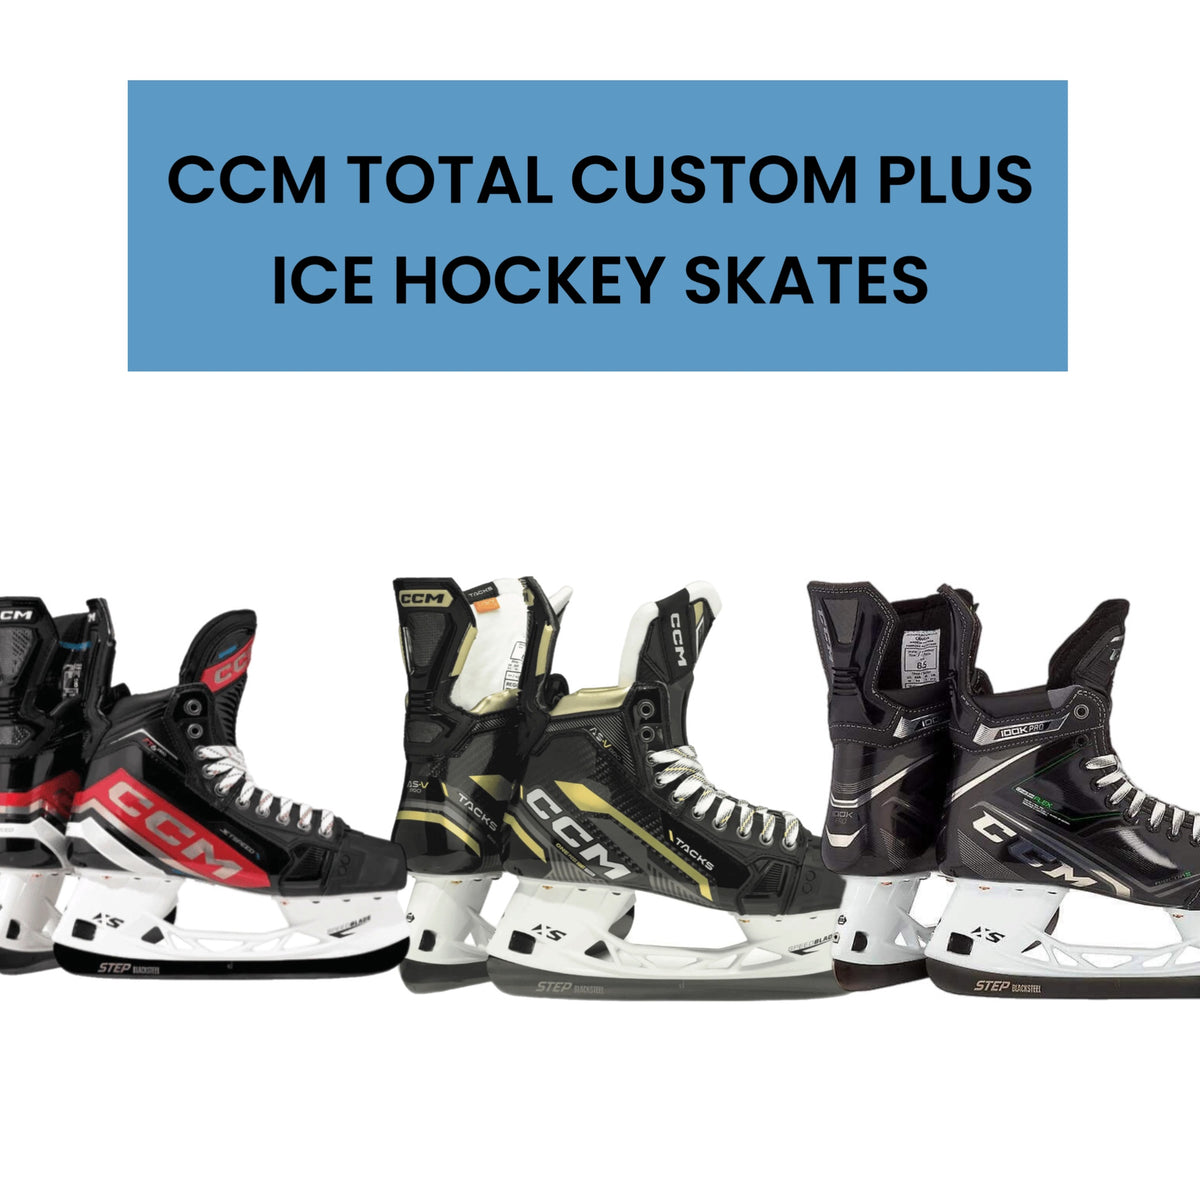 CCM Total Custom Plus Ice Hockey Skates